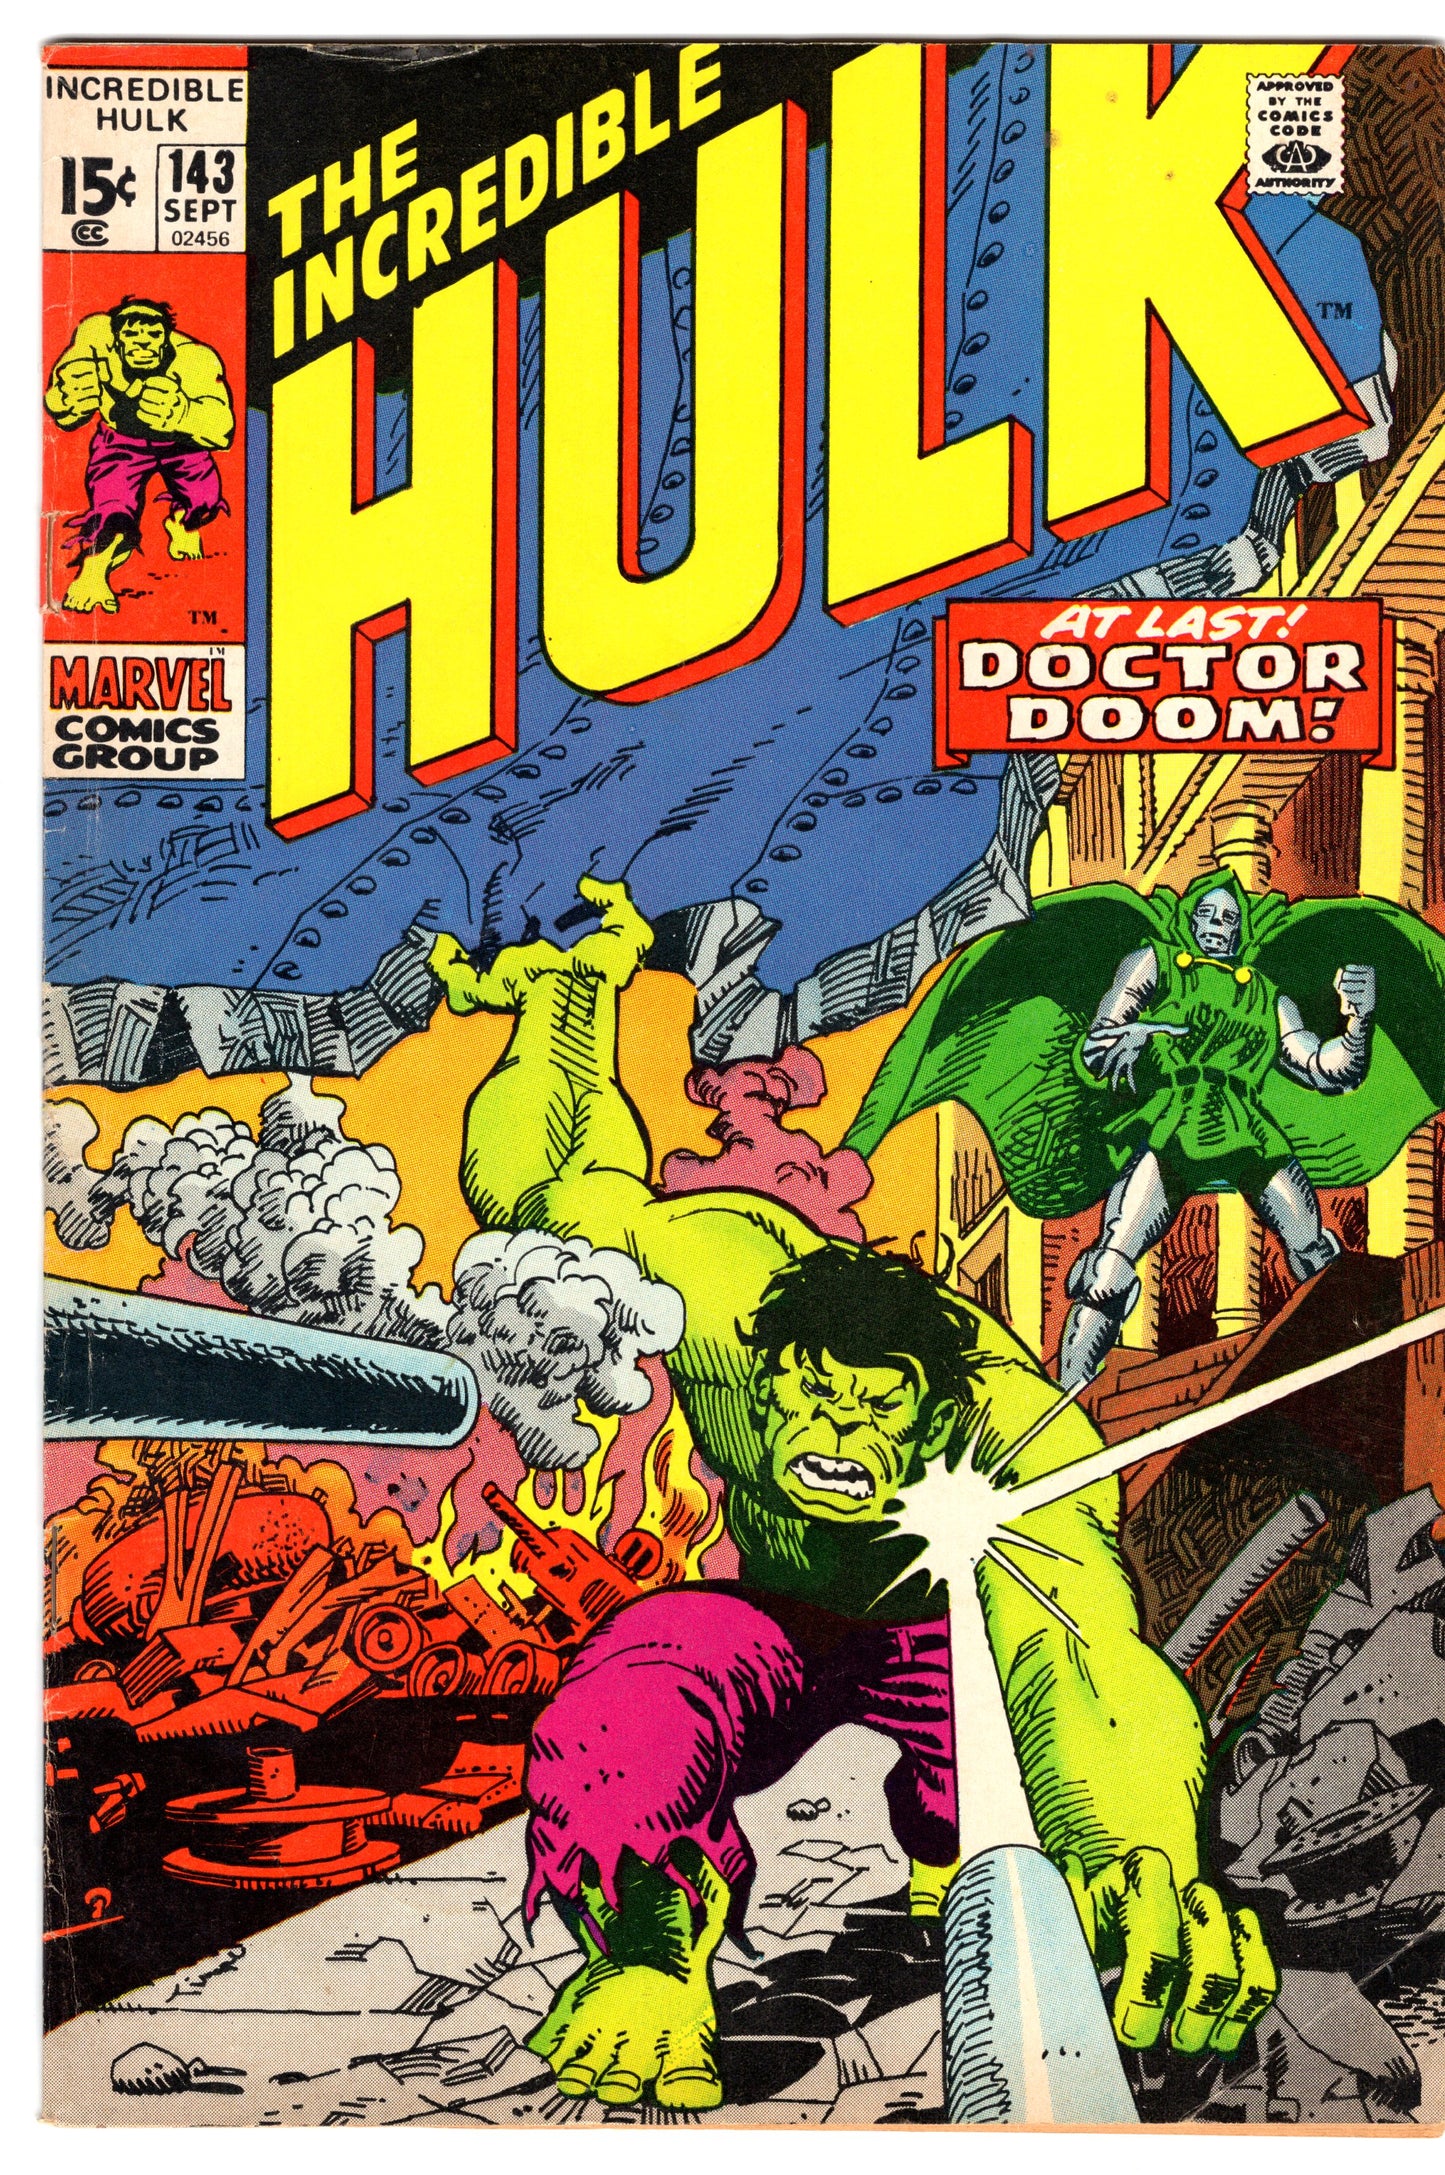 The Incredible Hulk - Issue #143 (Sept. 1971 - Marvel Comics) VG/FN